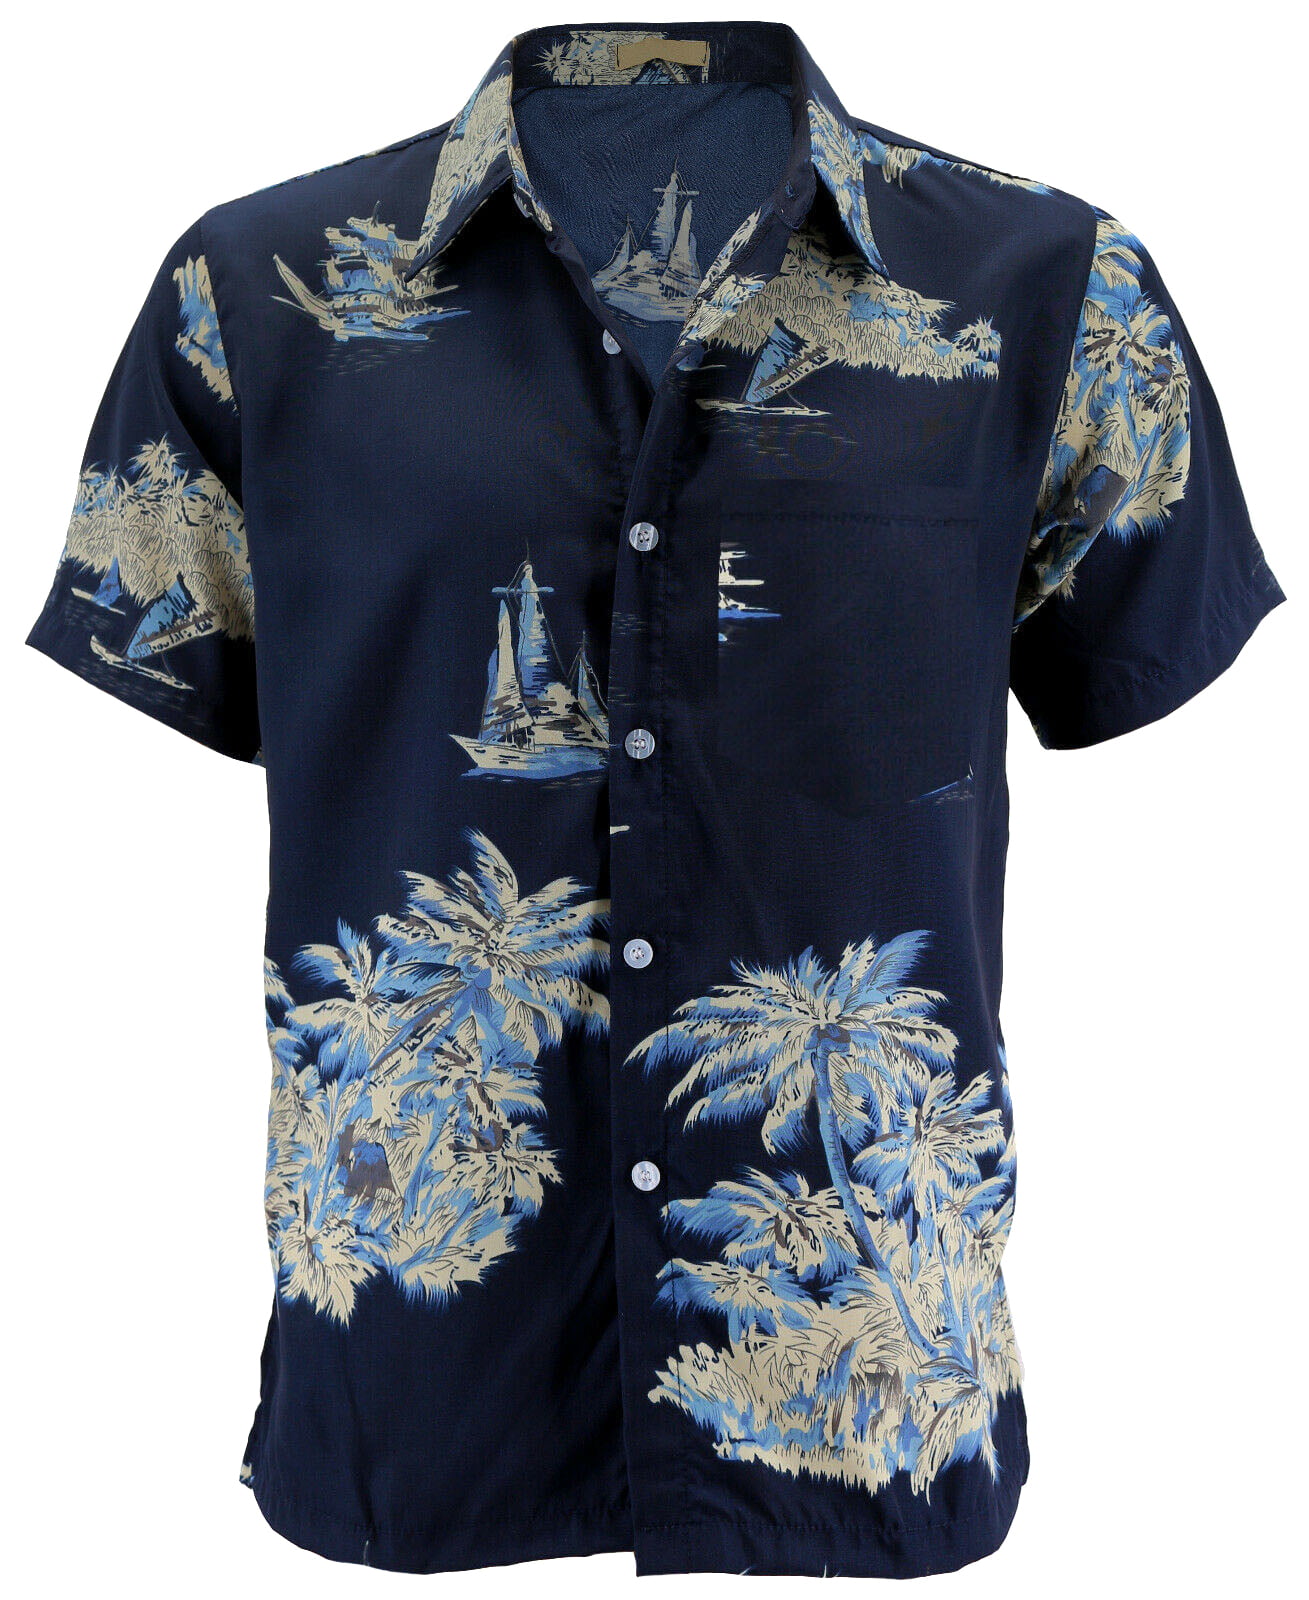 Men's Hawaiian Tropical Beach Party Button Up Casual Dress Shirt Printing Shirts